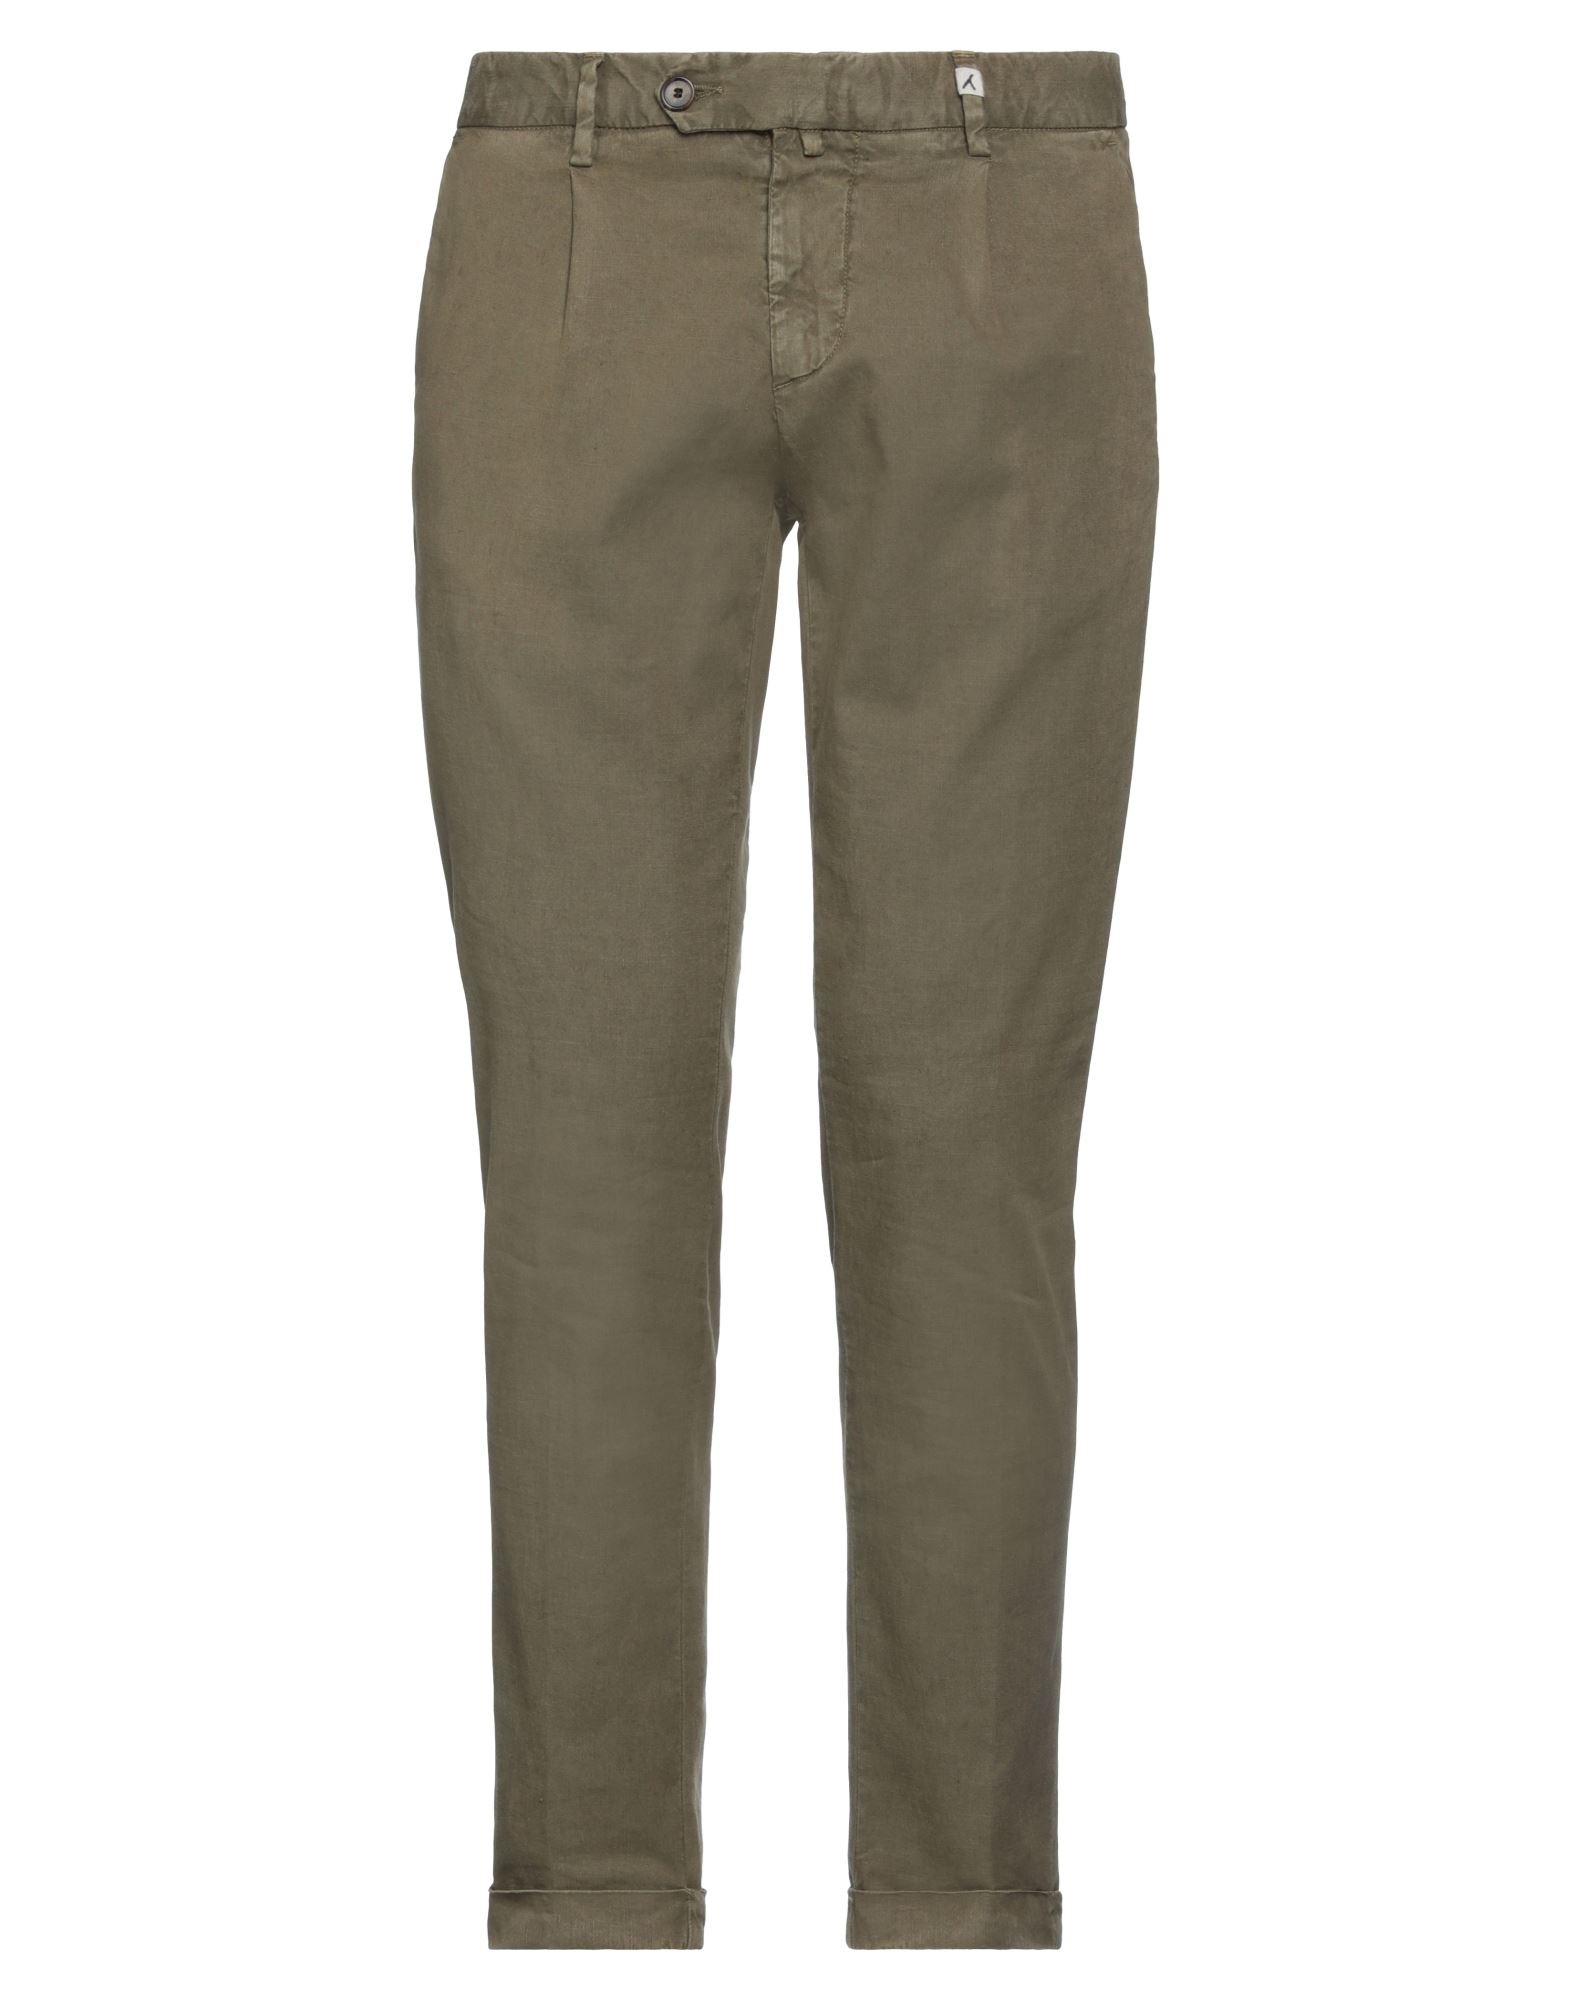 Shop Myths Man Pants Military Green Size 36 Linen, Cotton, Elastane